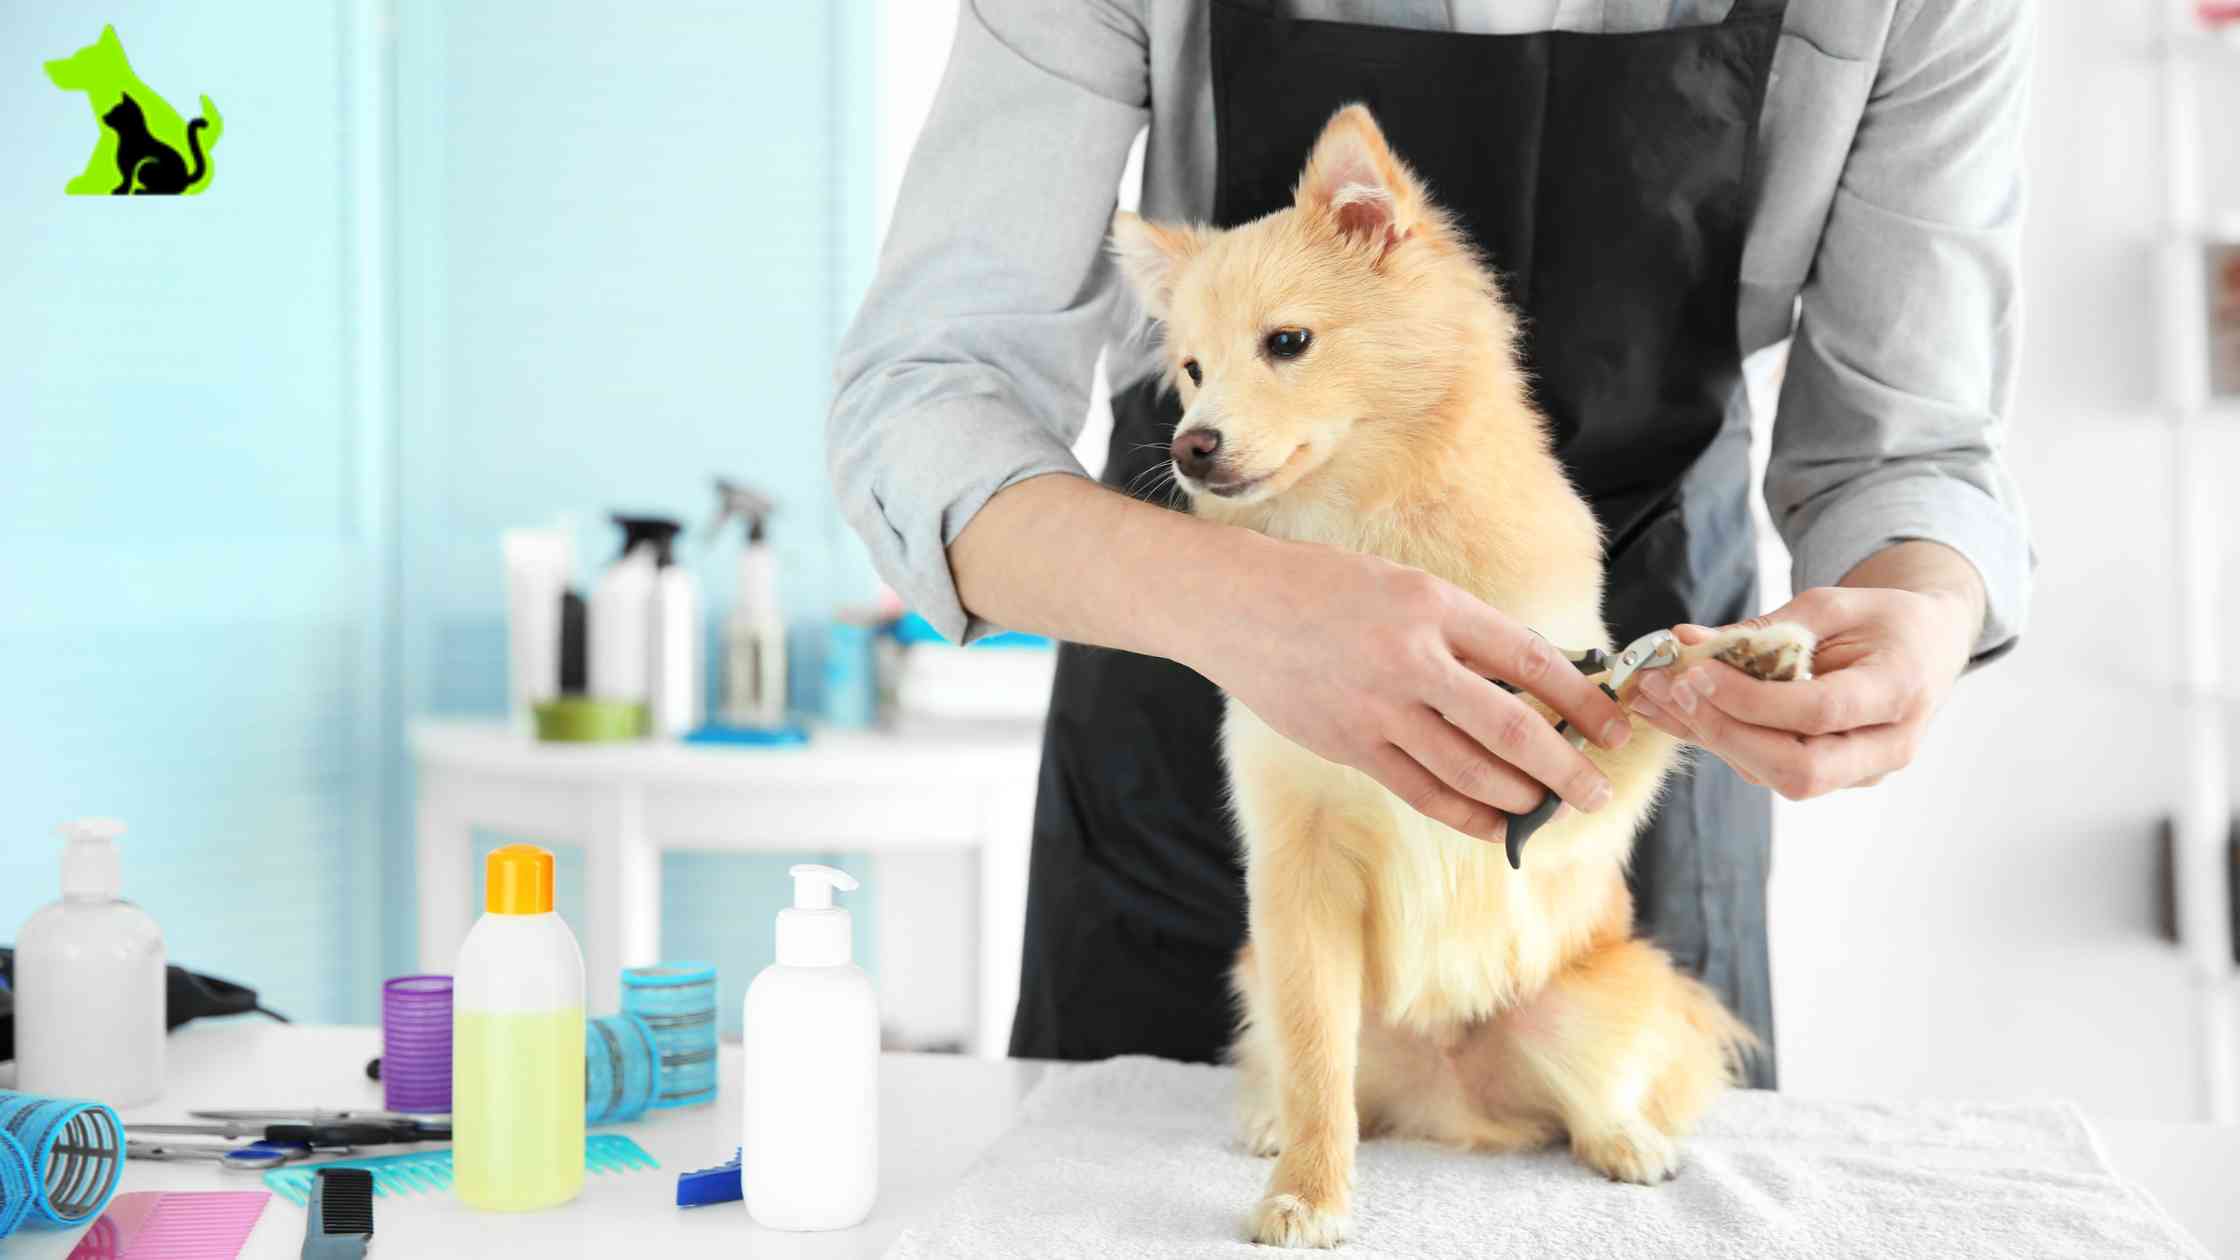 Creative dog grooming